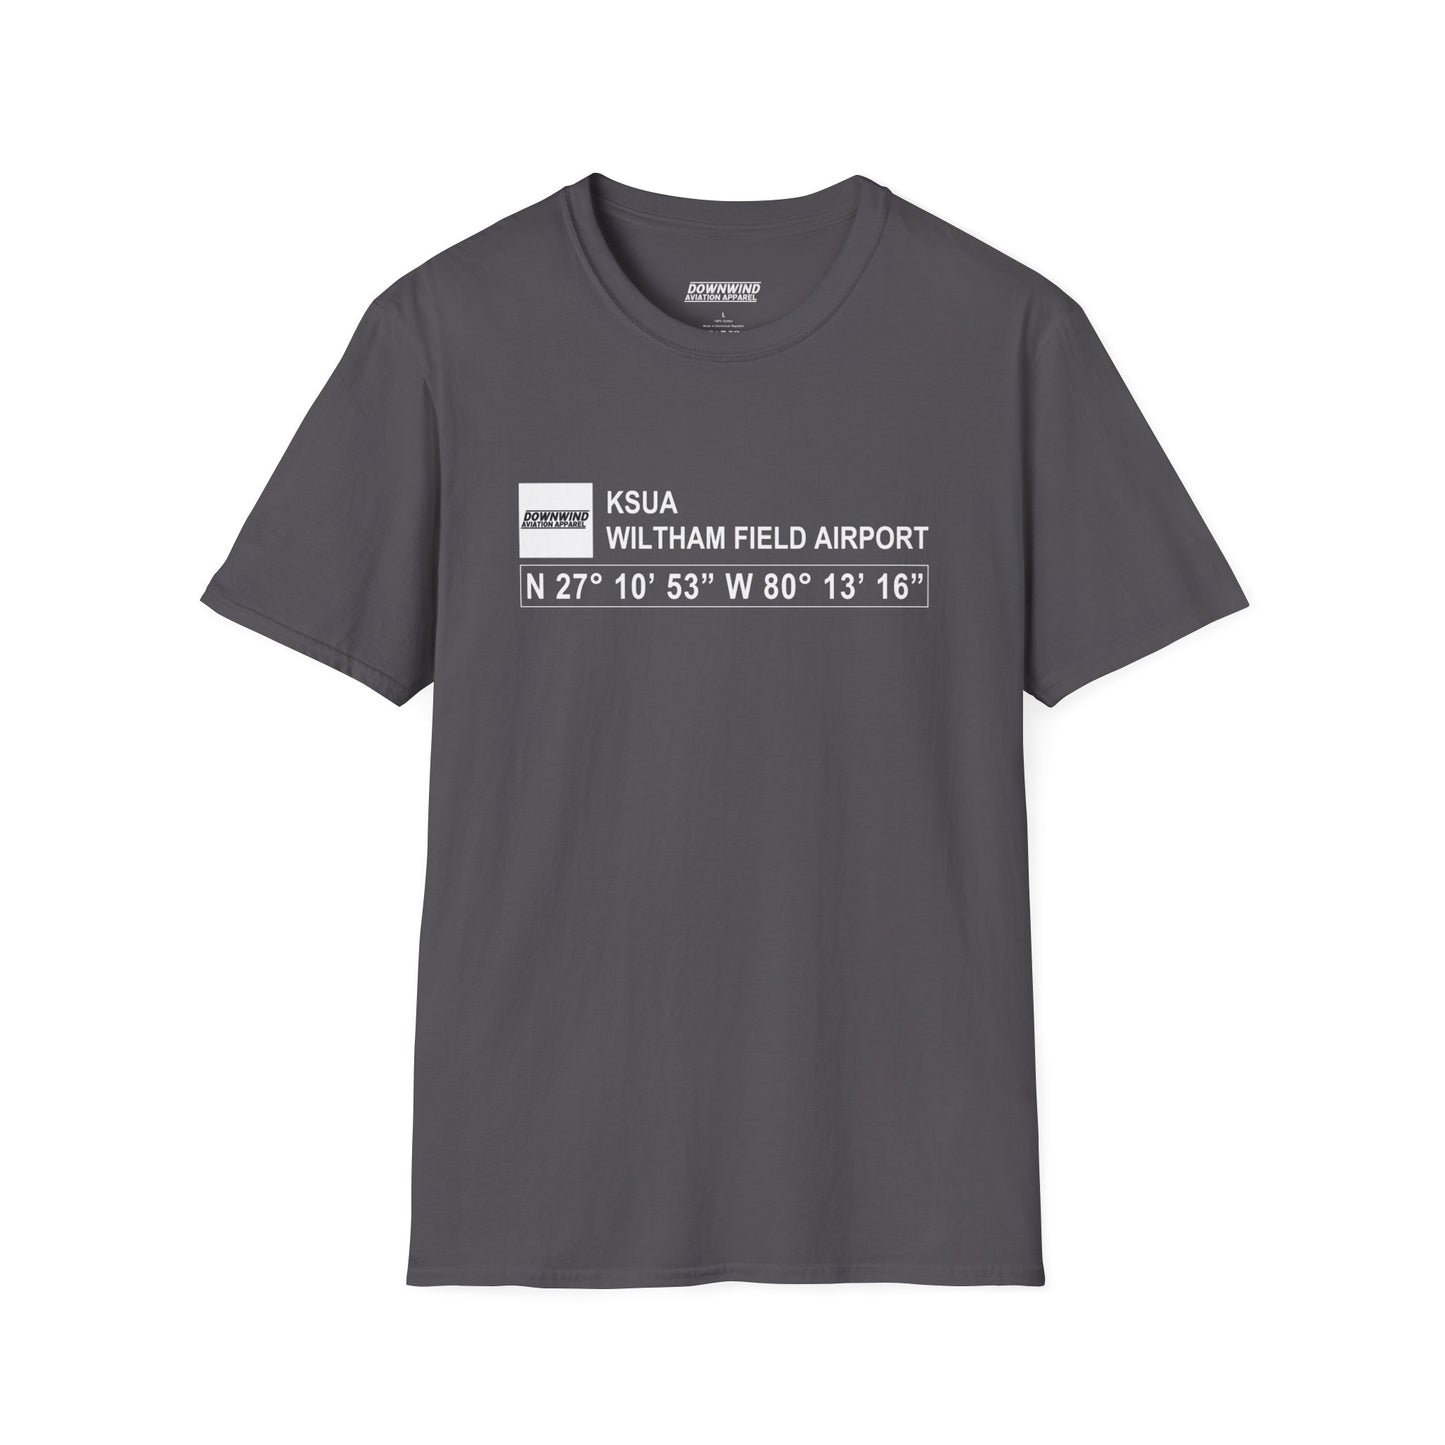 KSUA / Wiltham Field Airport T-Shirt